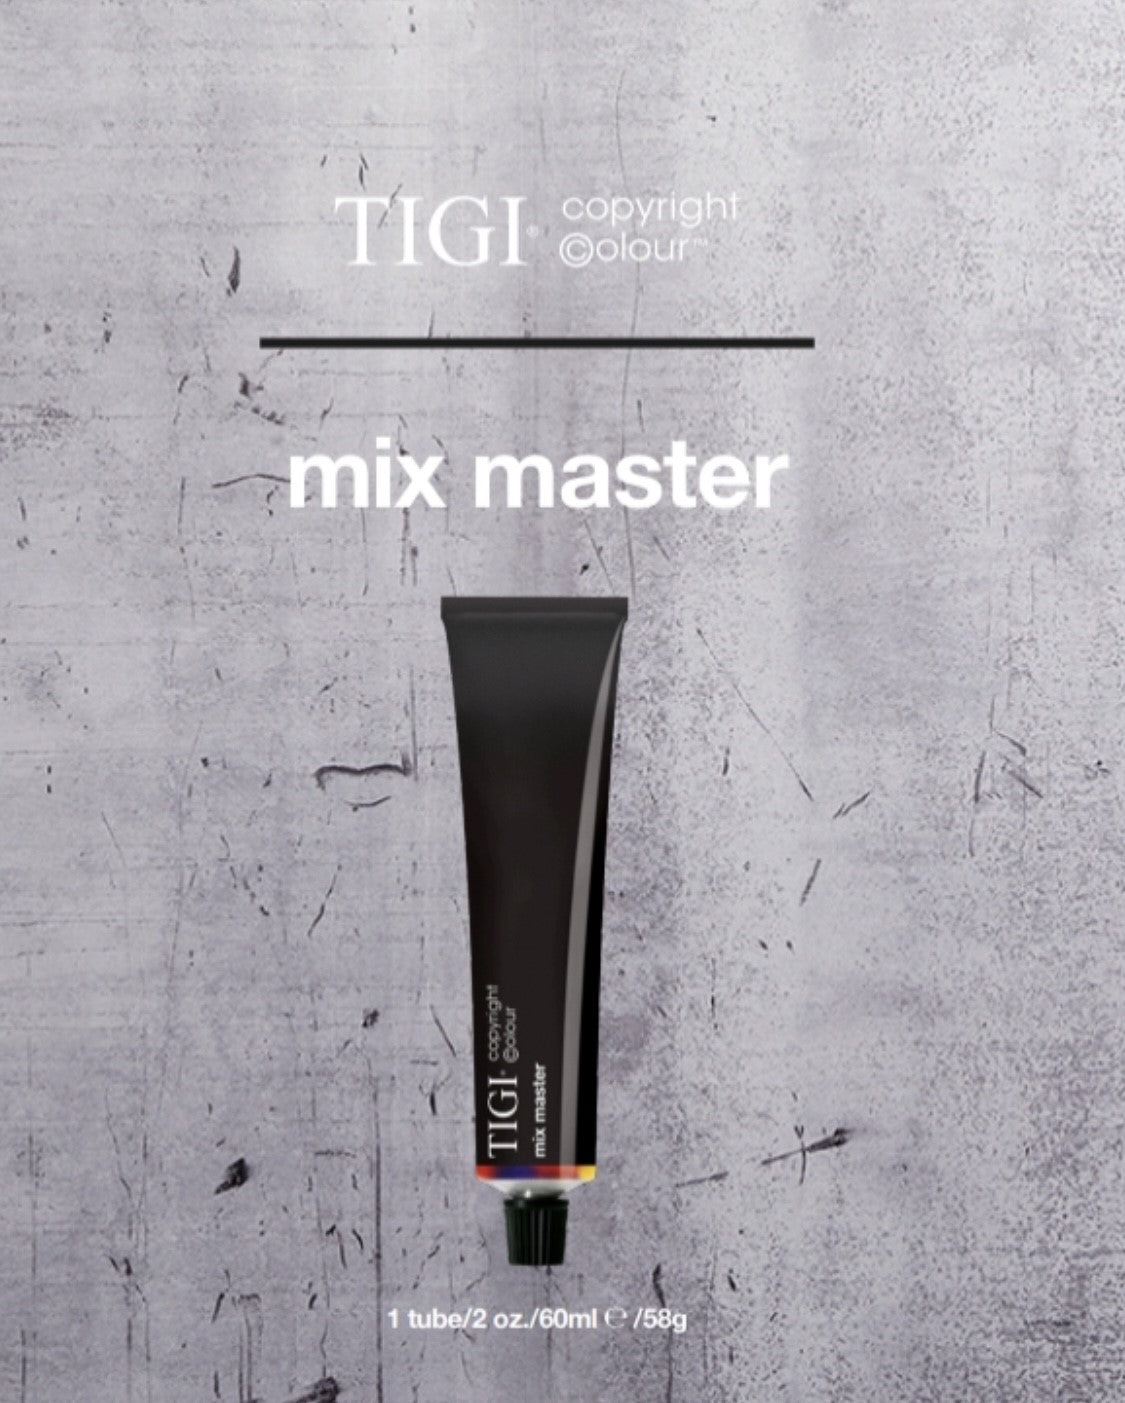 TIGI COPYRIGHT - MIX MASTER /00 CLEAR+